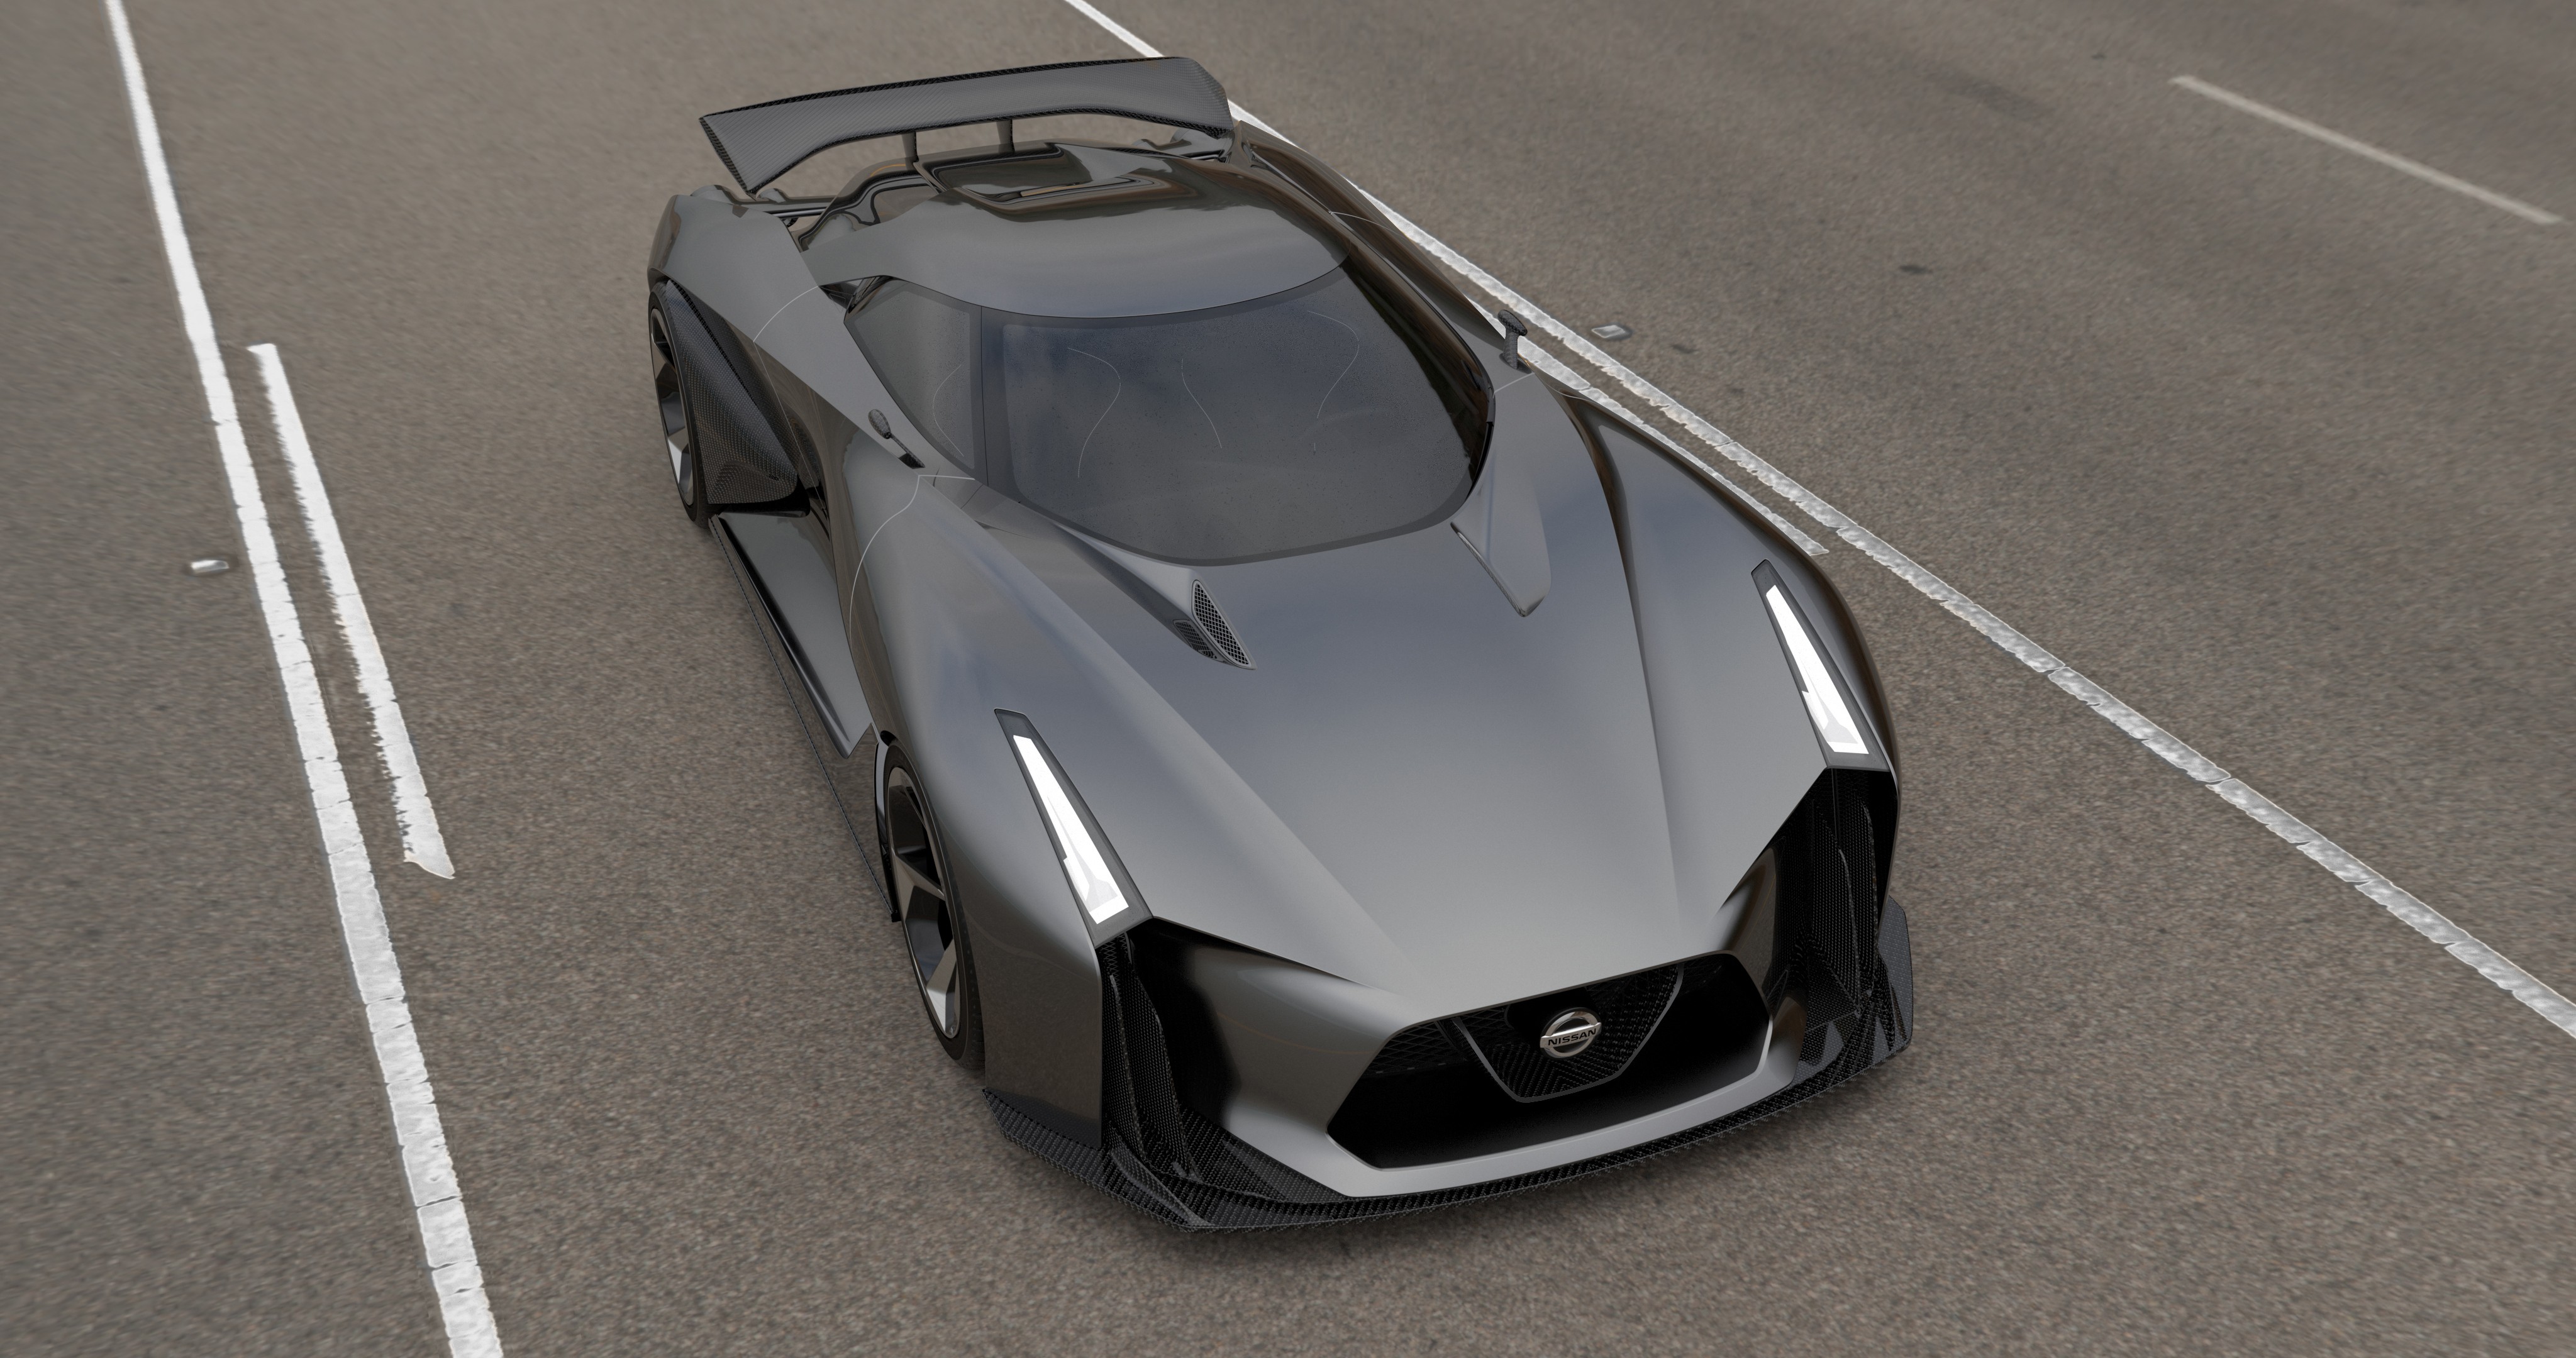 Car Nissan Nissan Concept 2020 Vision Gran Turismo High Angle Supercars 4096x2160